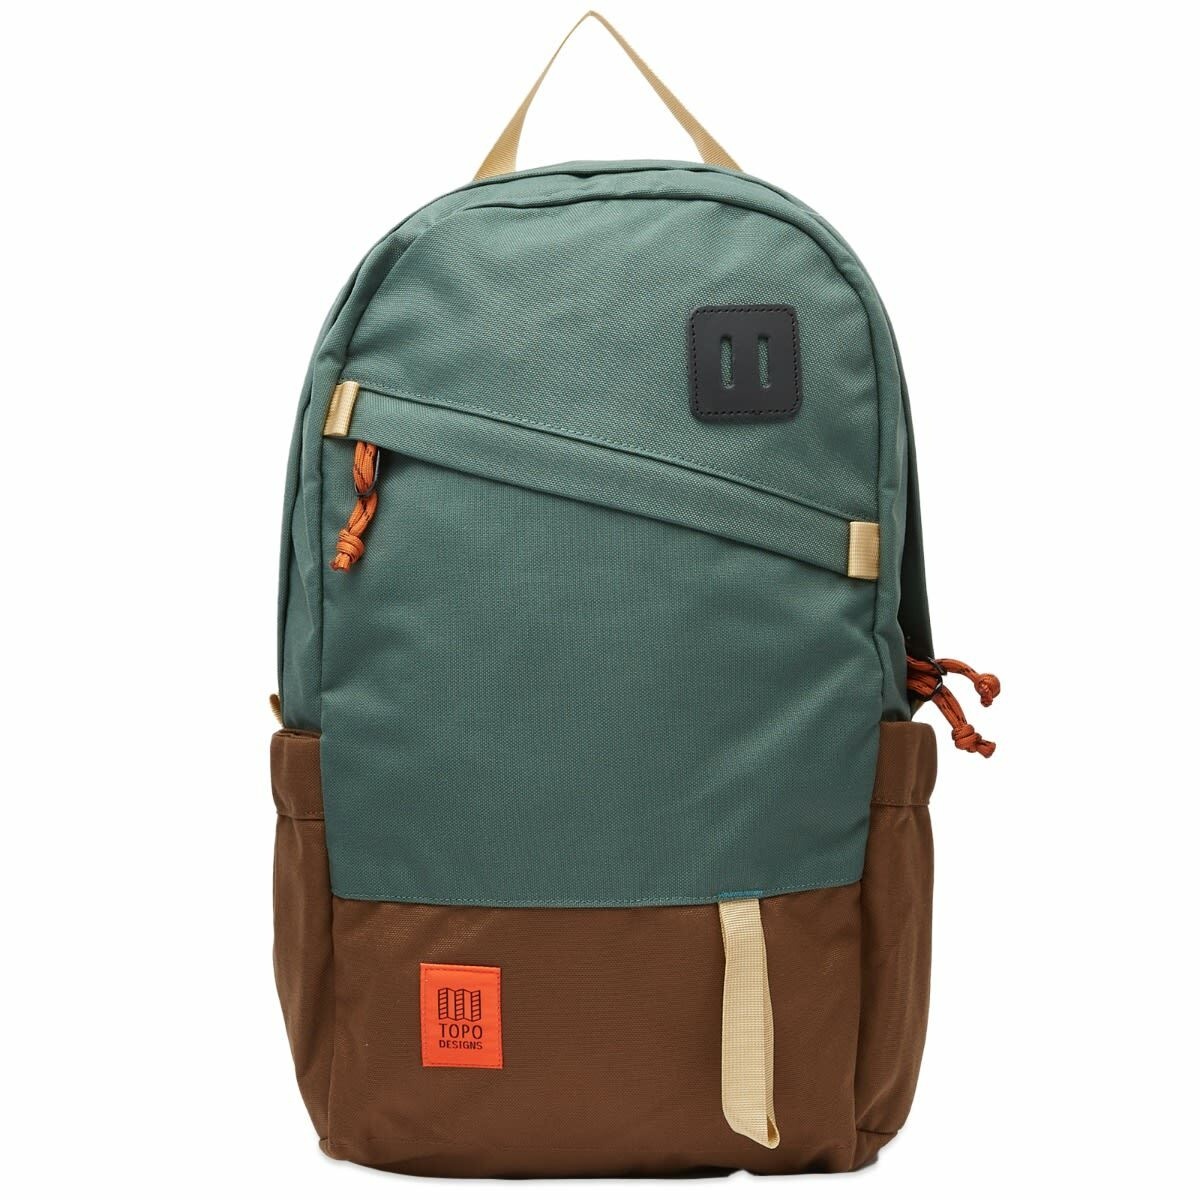 Topo Designs Daypack Classic Backpack in Forest/Cocoa Topo Designs